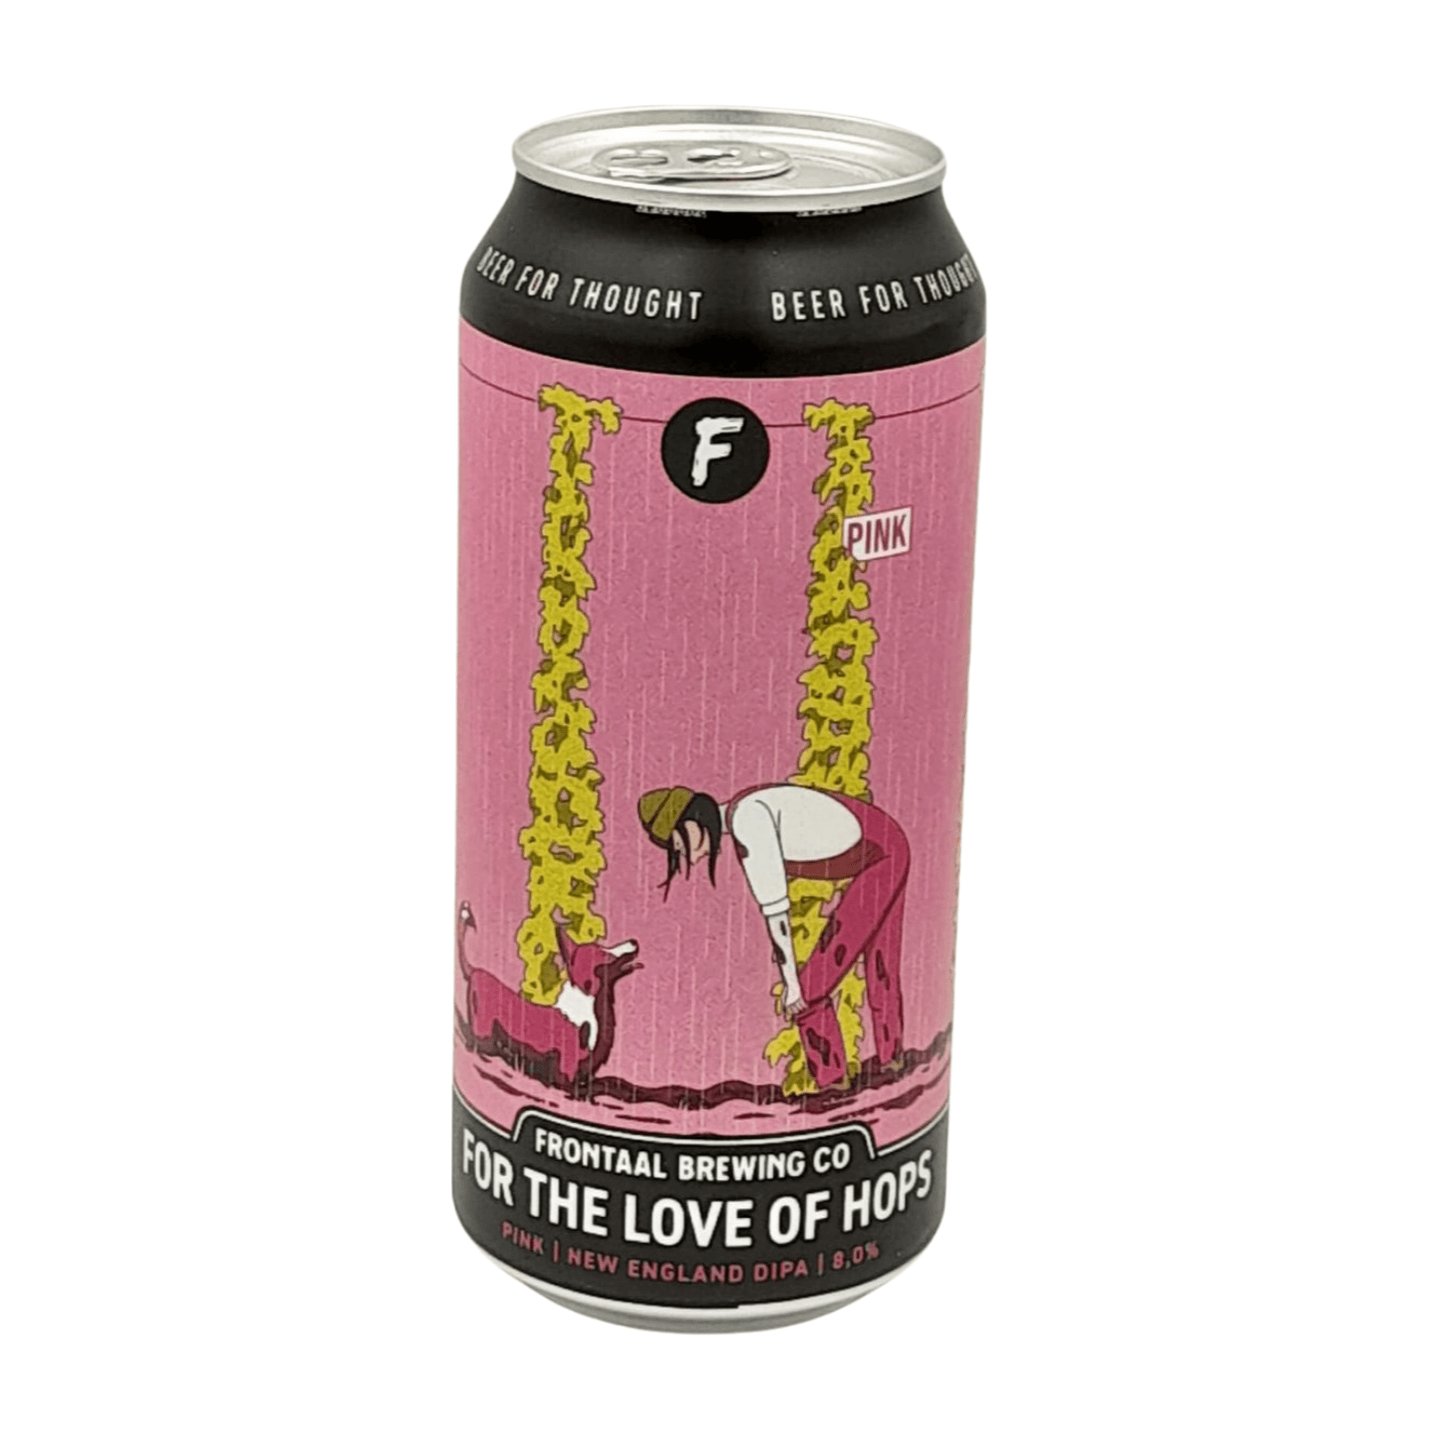 Frontaal Brewing Co. For The Love of Hops Pink | DIPA Webshop Online Verdins Bierwinkel Rotterdam